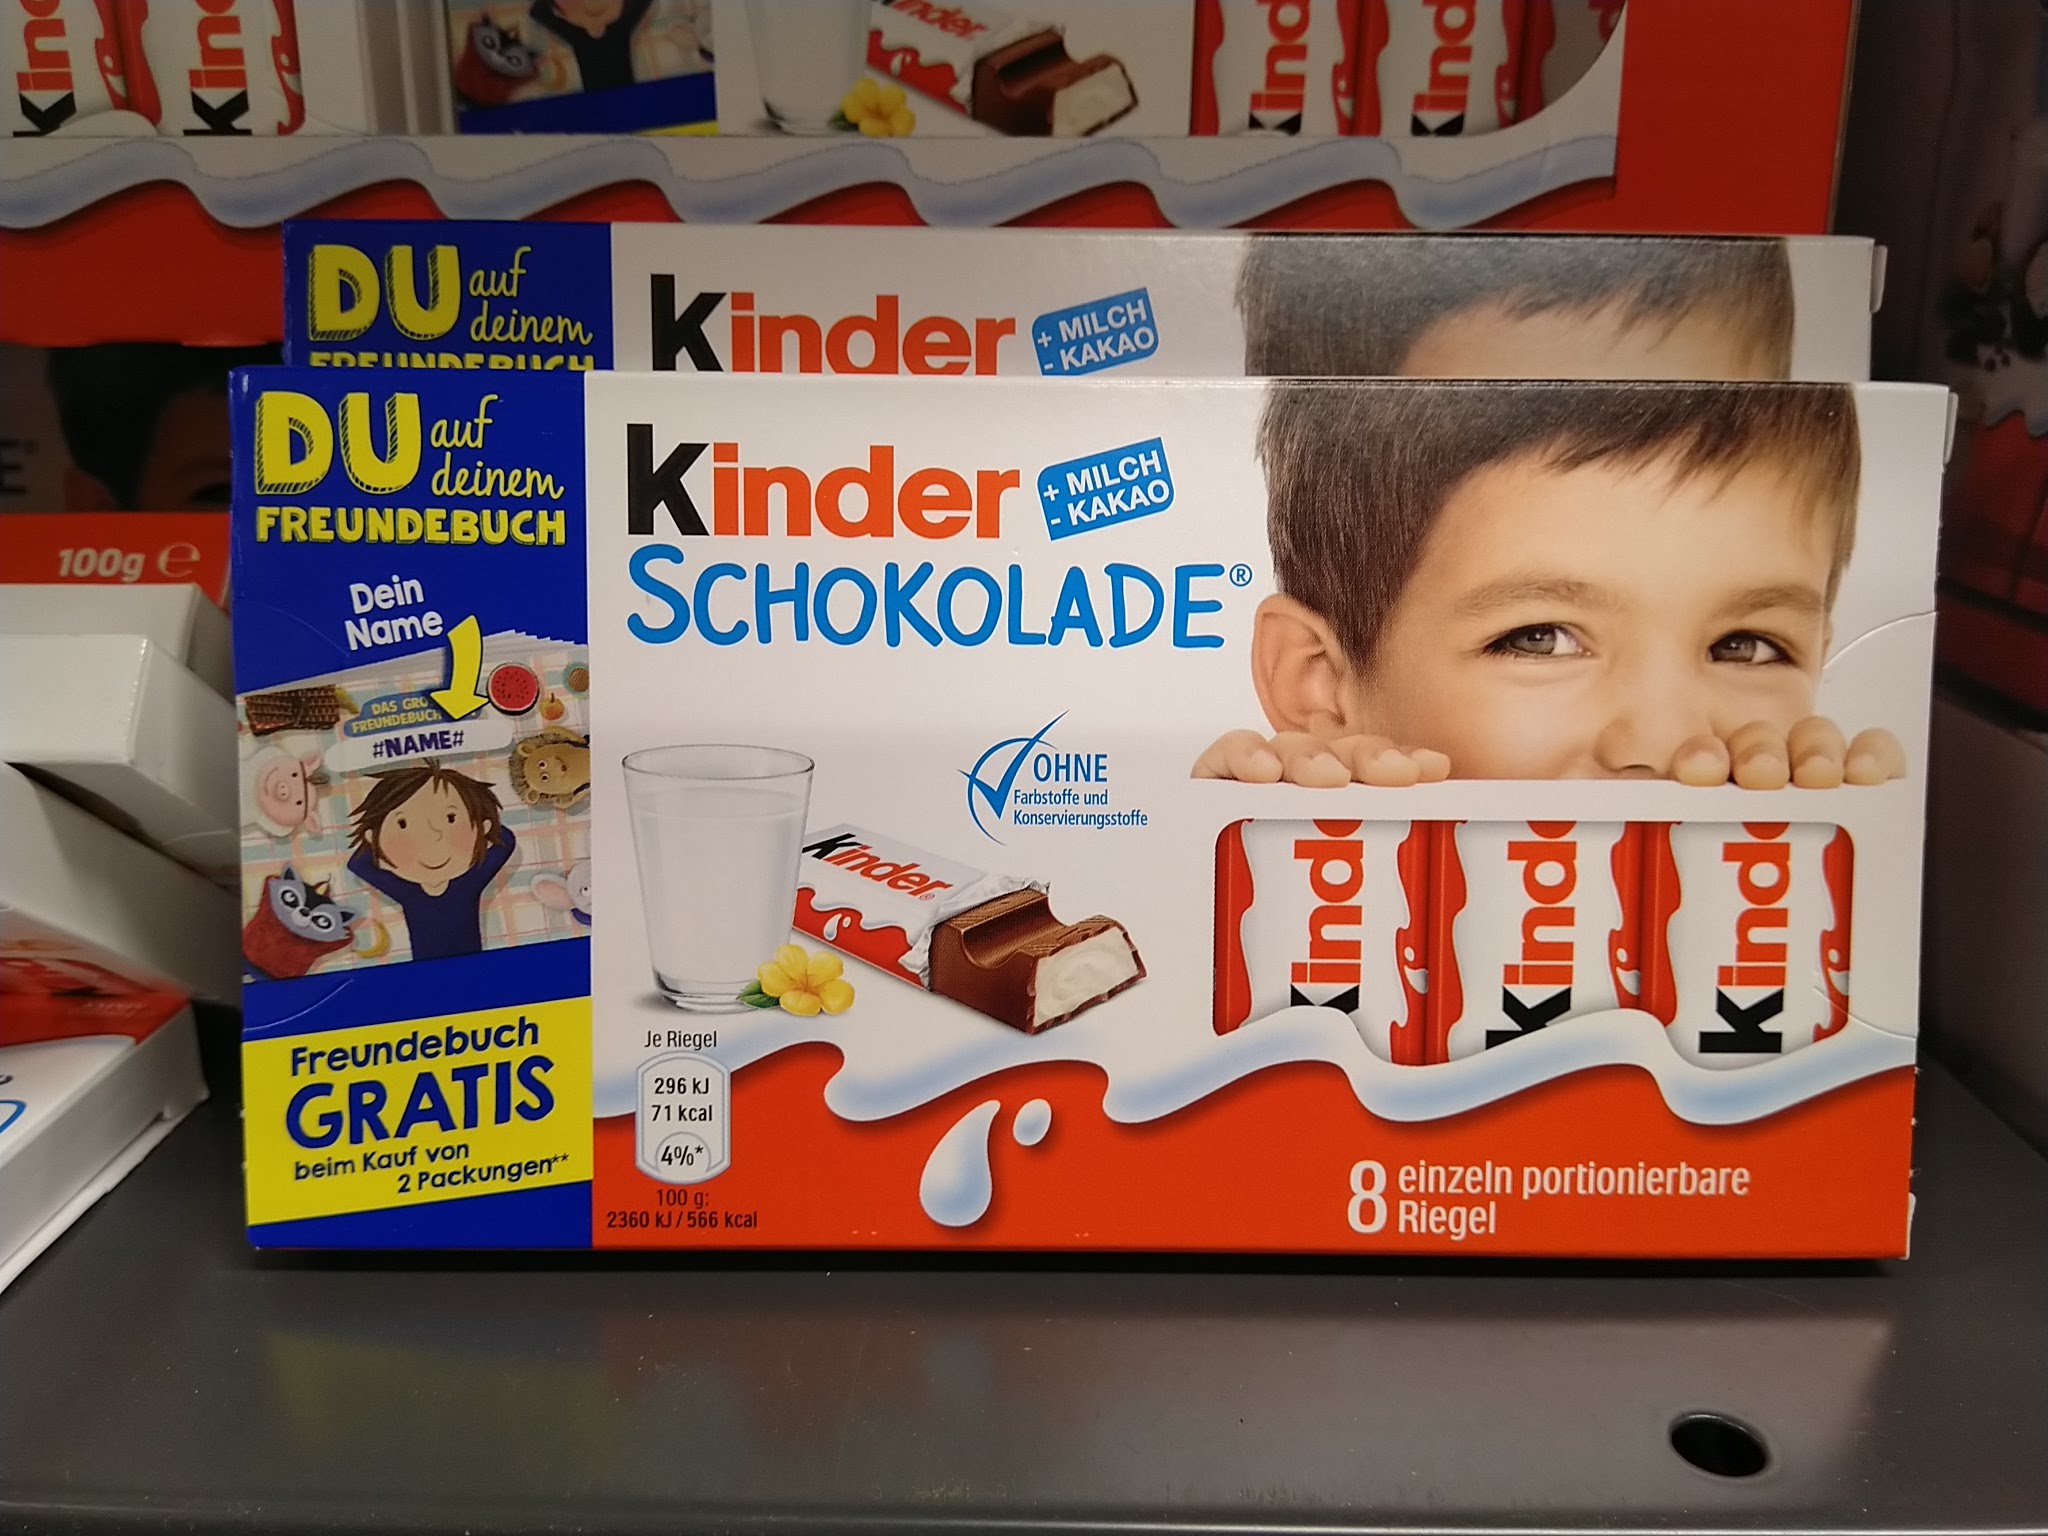 Kinderschokolade: Freundebuch gratis